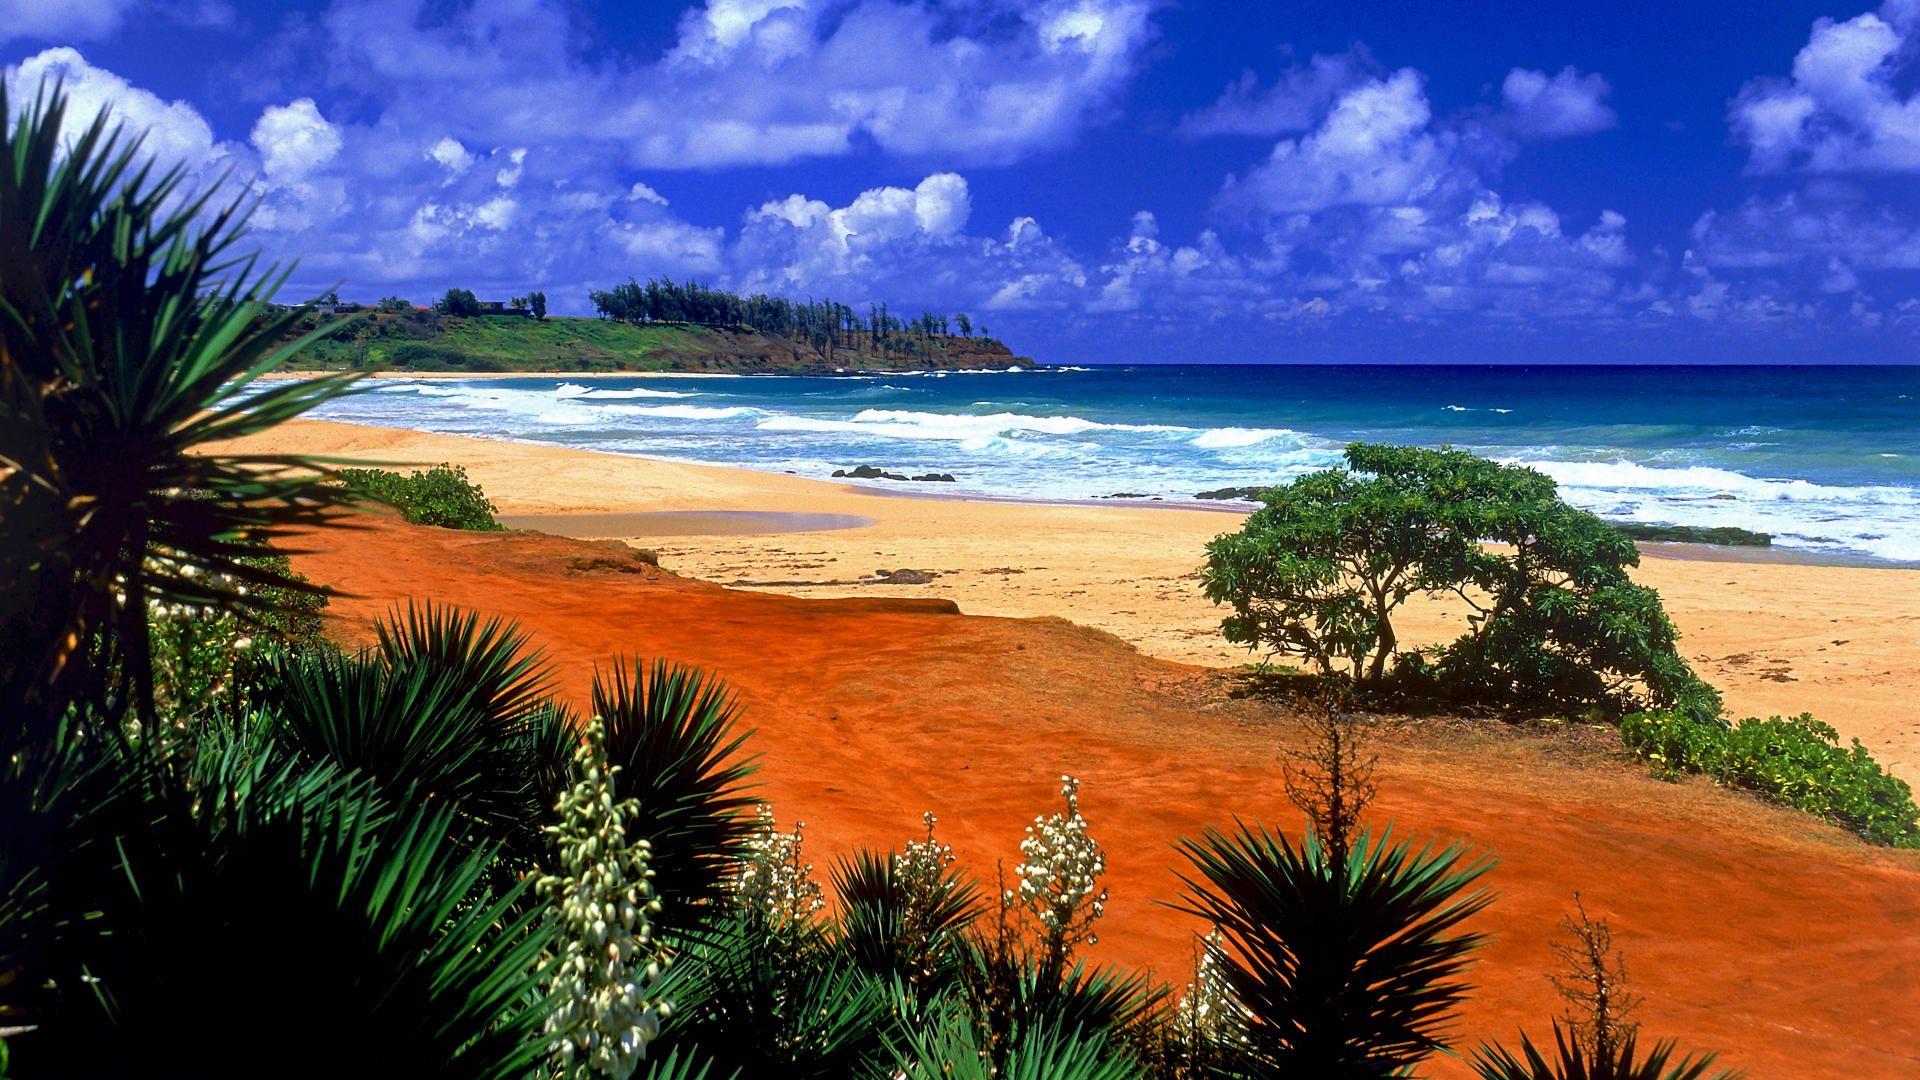 Hawaii Guide Kauai Beaches Are Known For Their